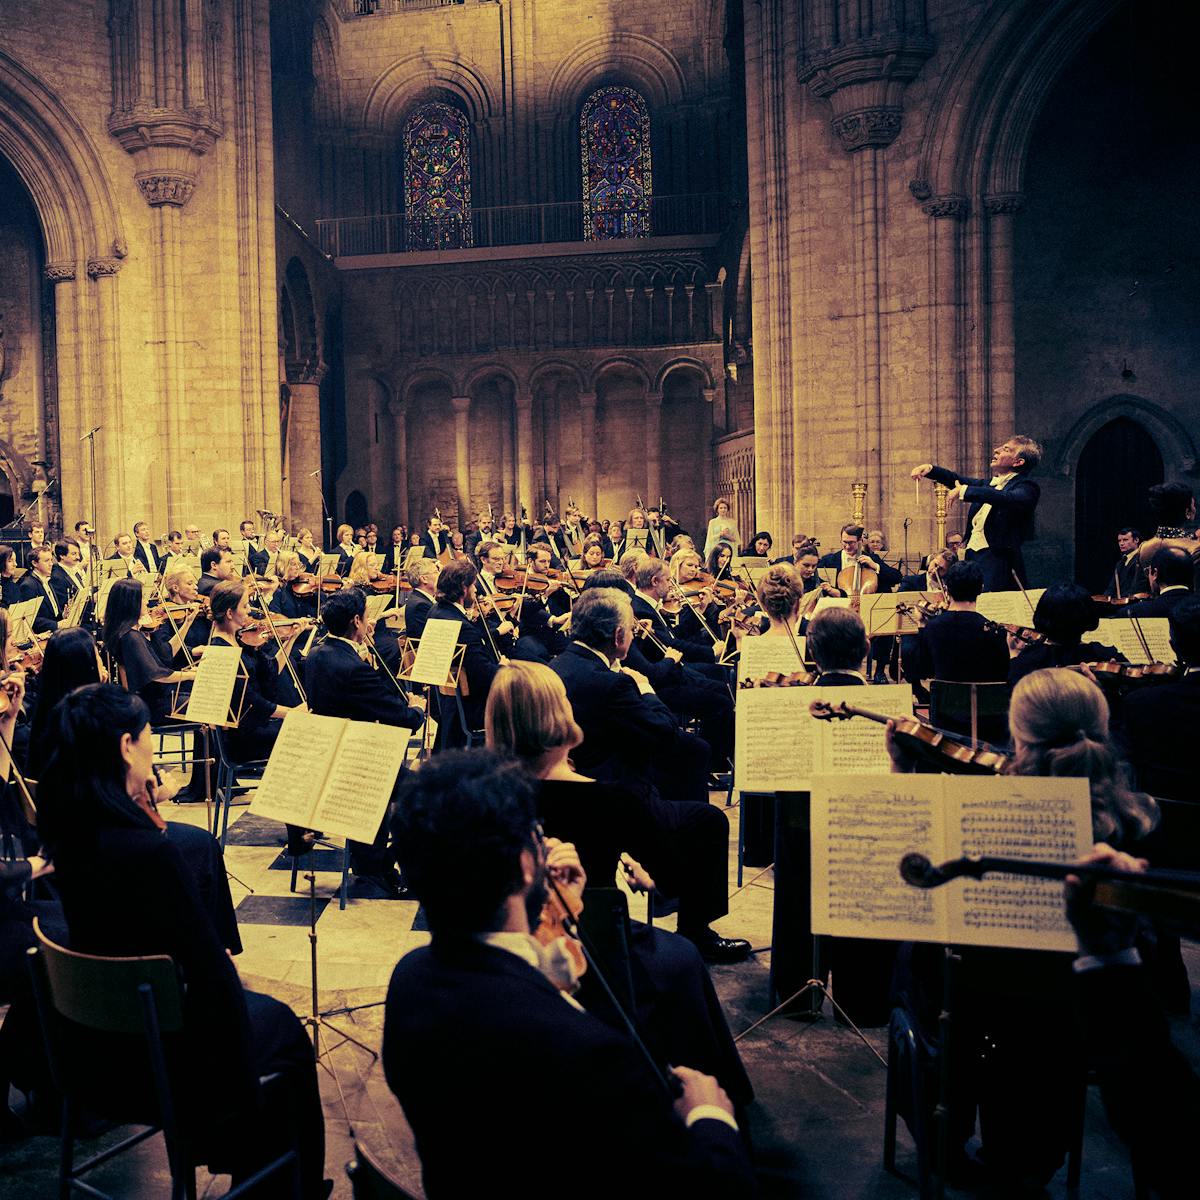 Leonard Bernstein (Bradley Cooper) conducts an orchestra in a grand hall.